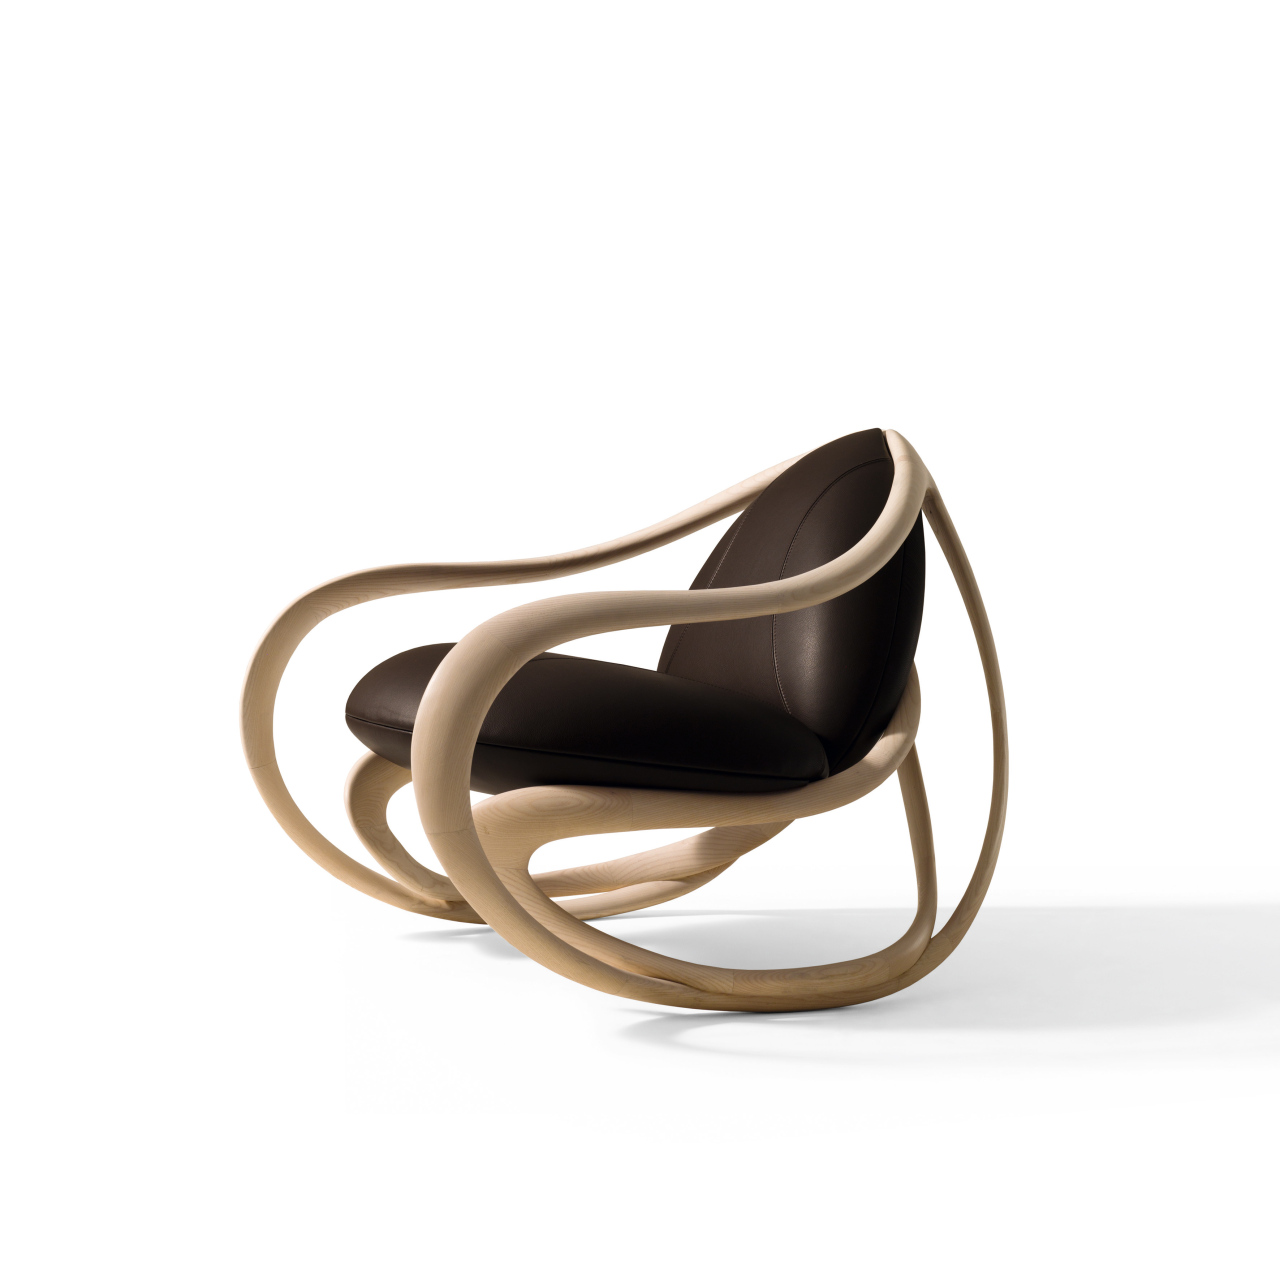 The “Move” chair from Italian luxury furniture brand Giorgetti (Hyundai Livart)